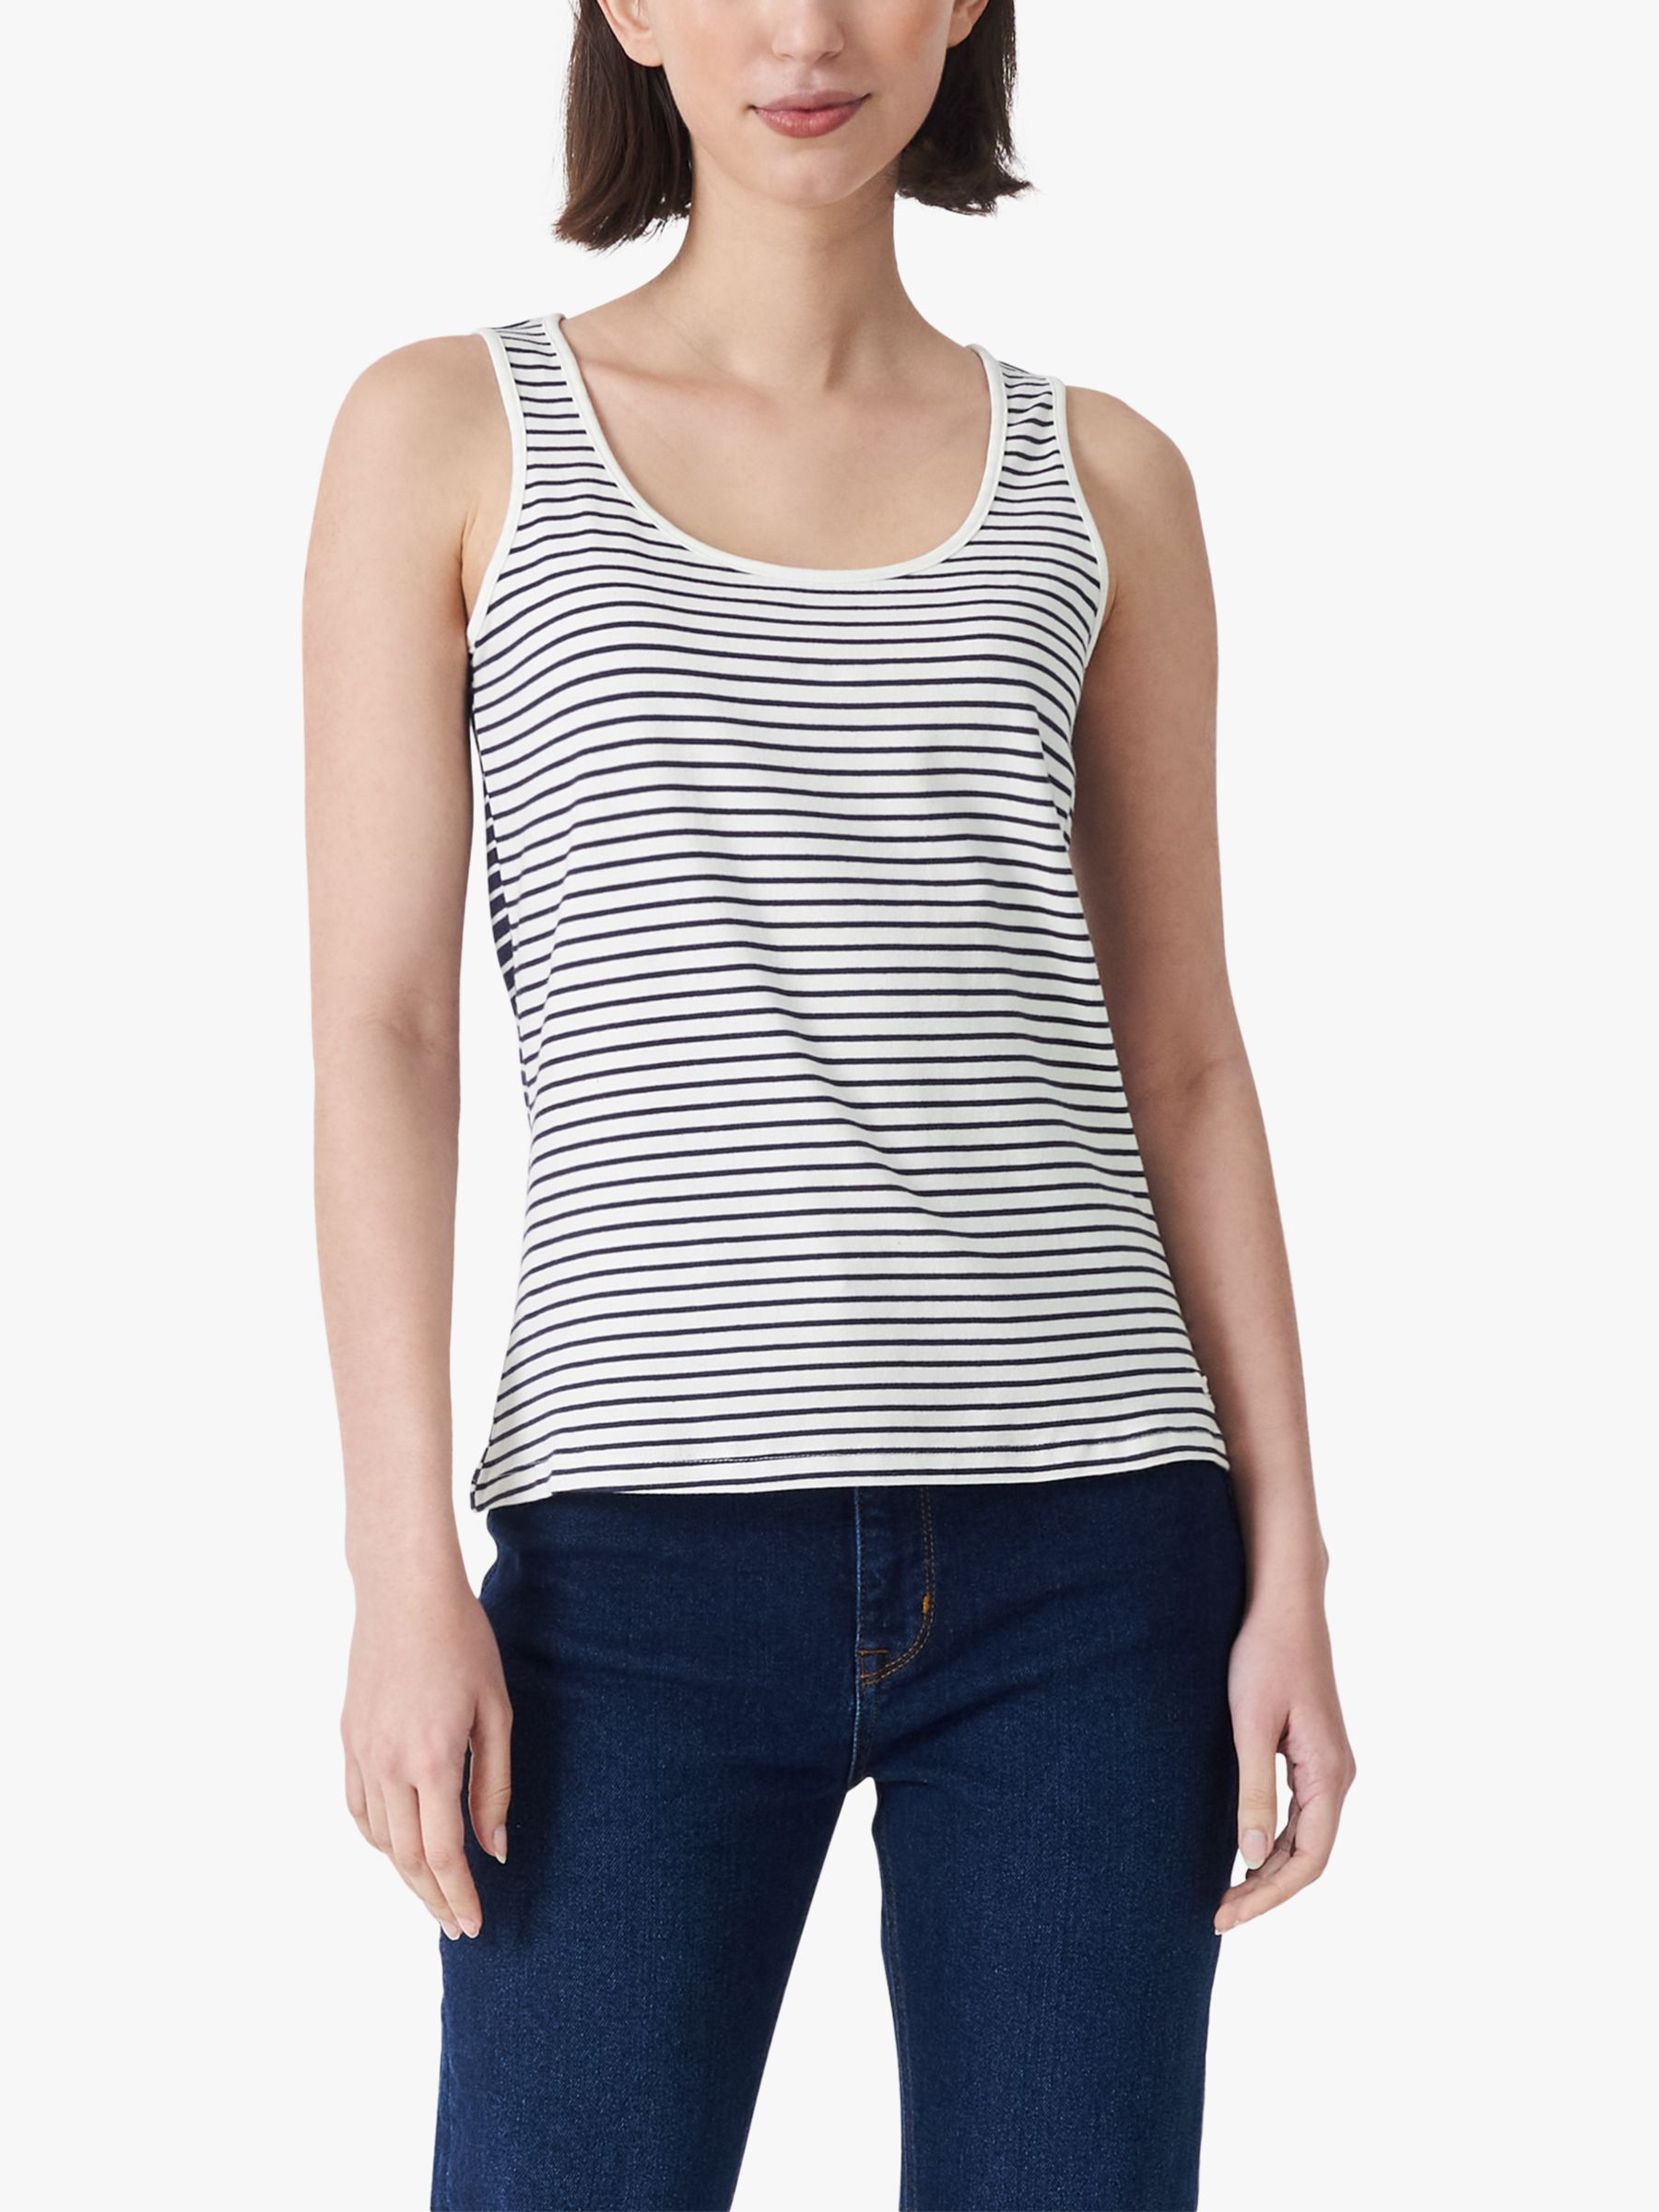 ANJUNIE Women Summer Strappy Stripe Sleeveless Blouse Casual Basic Tank Tops T-Shirt 